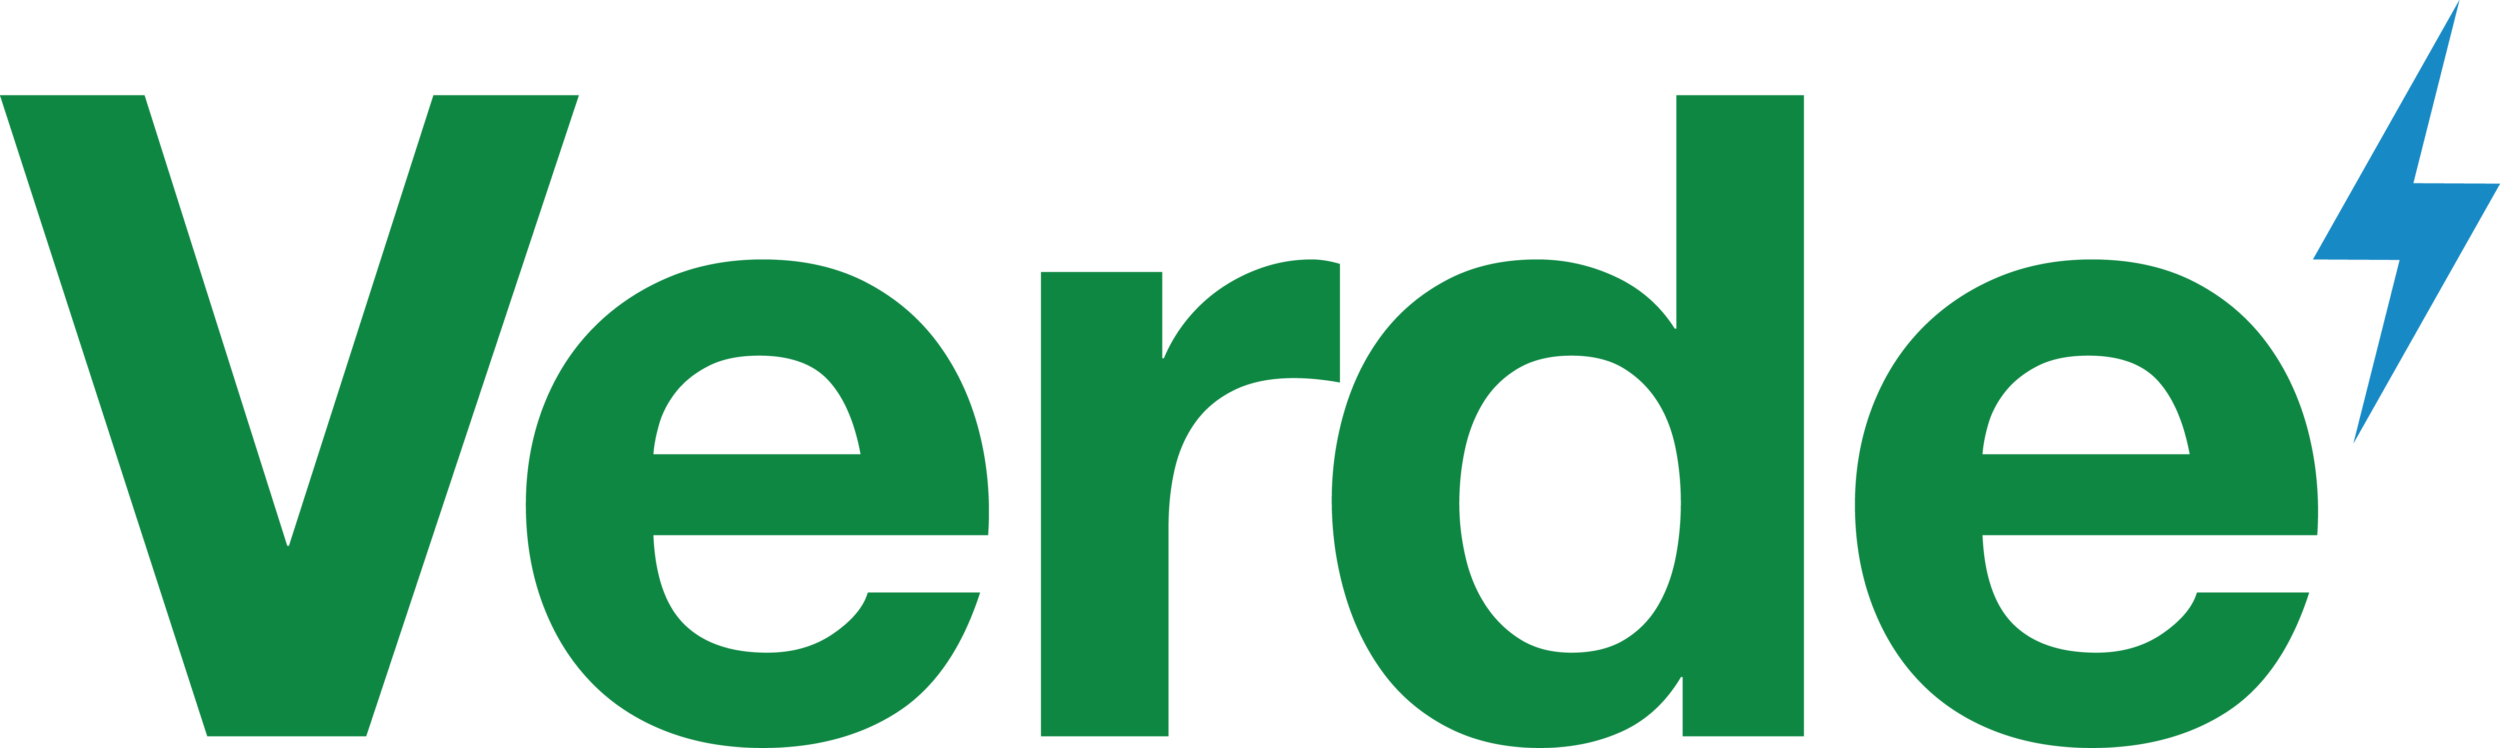 Electric Verde Logo